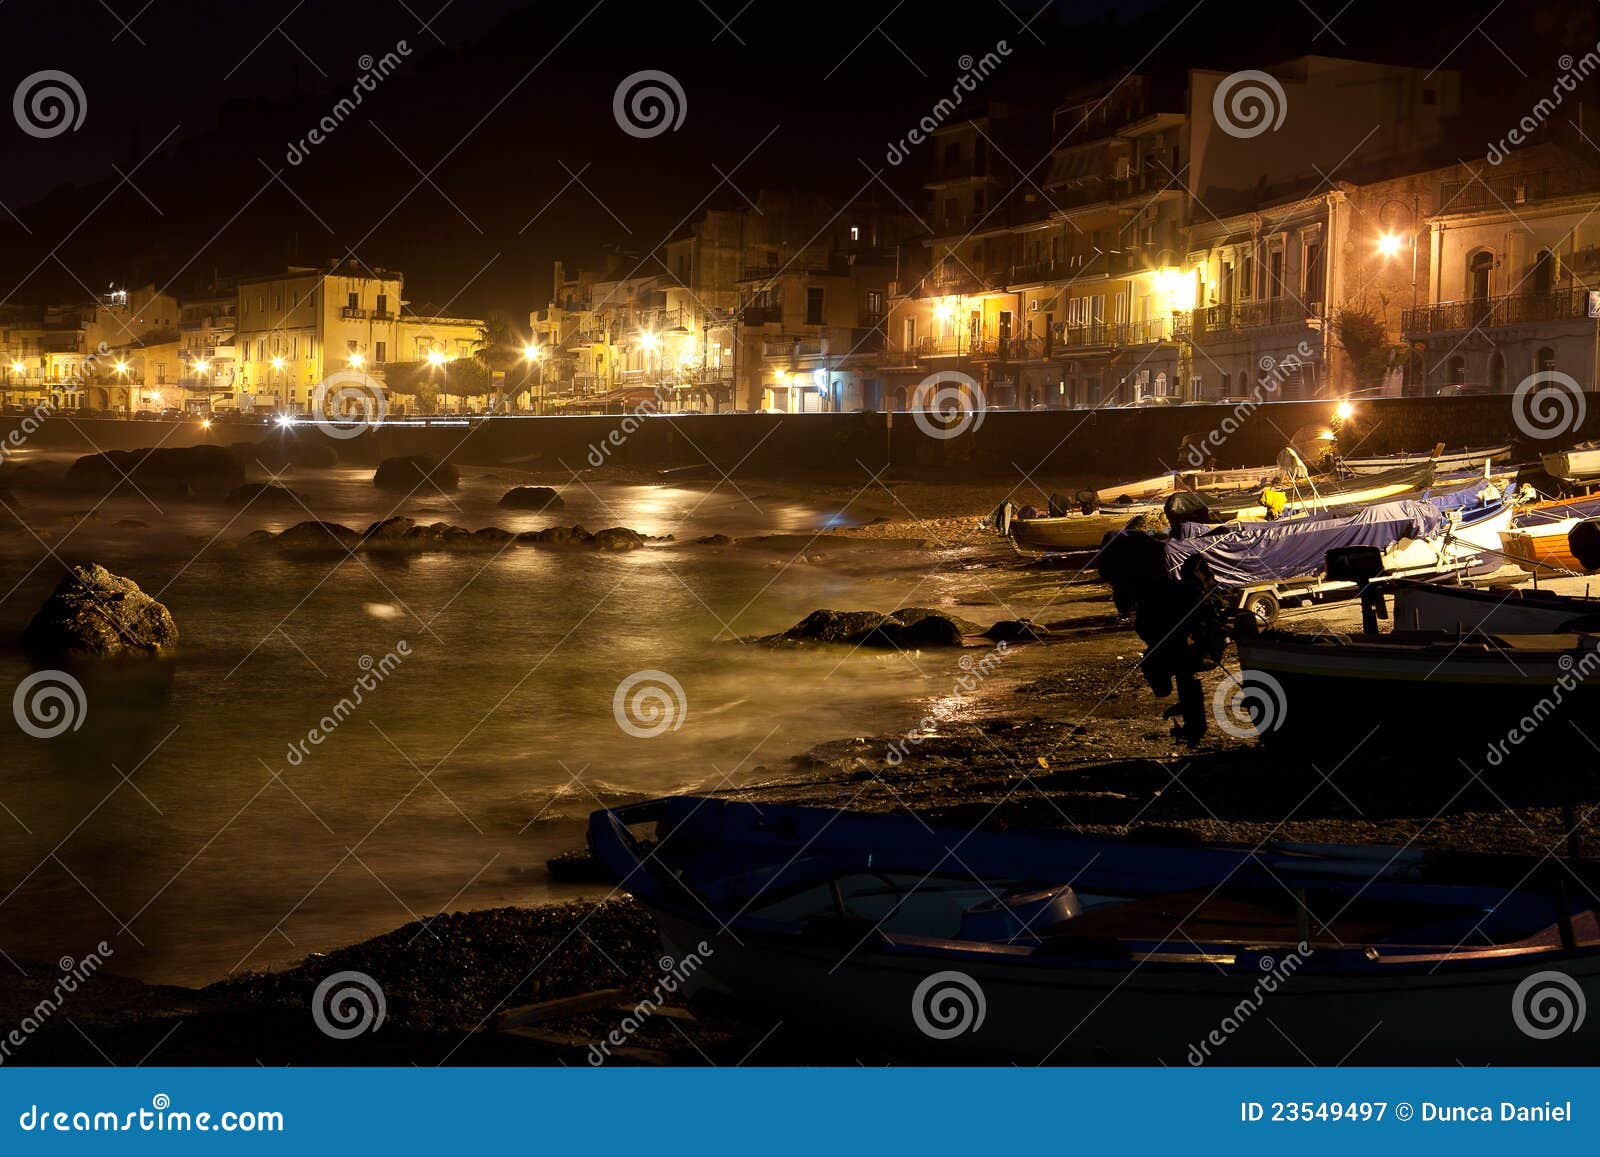 sicilia - town view at night